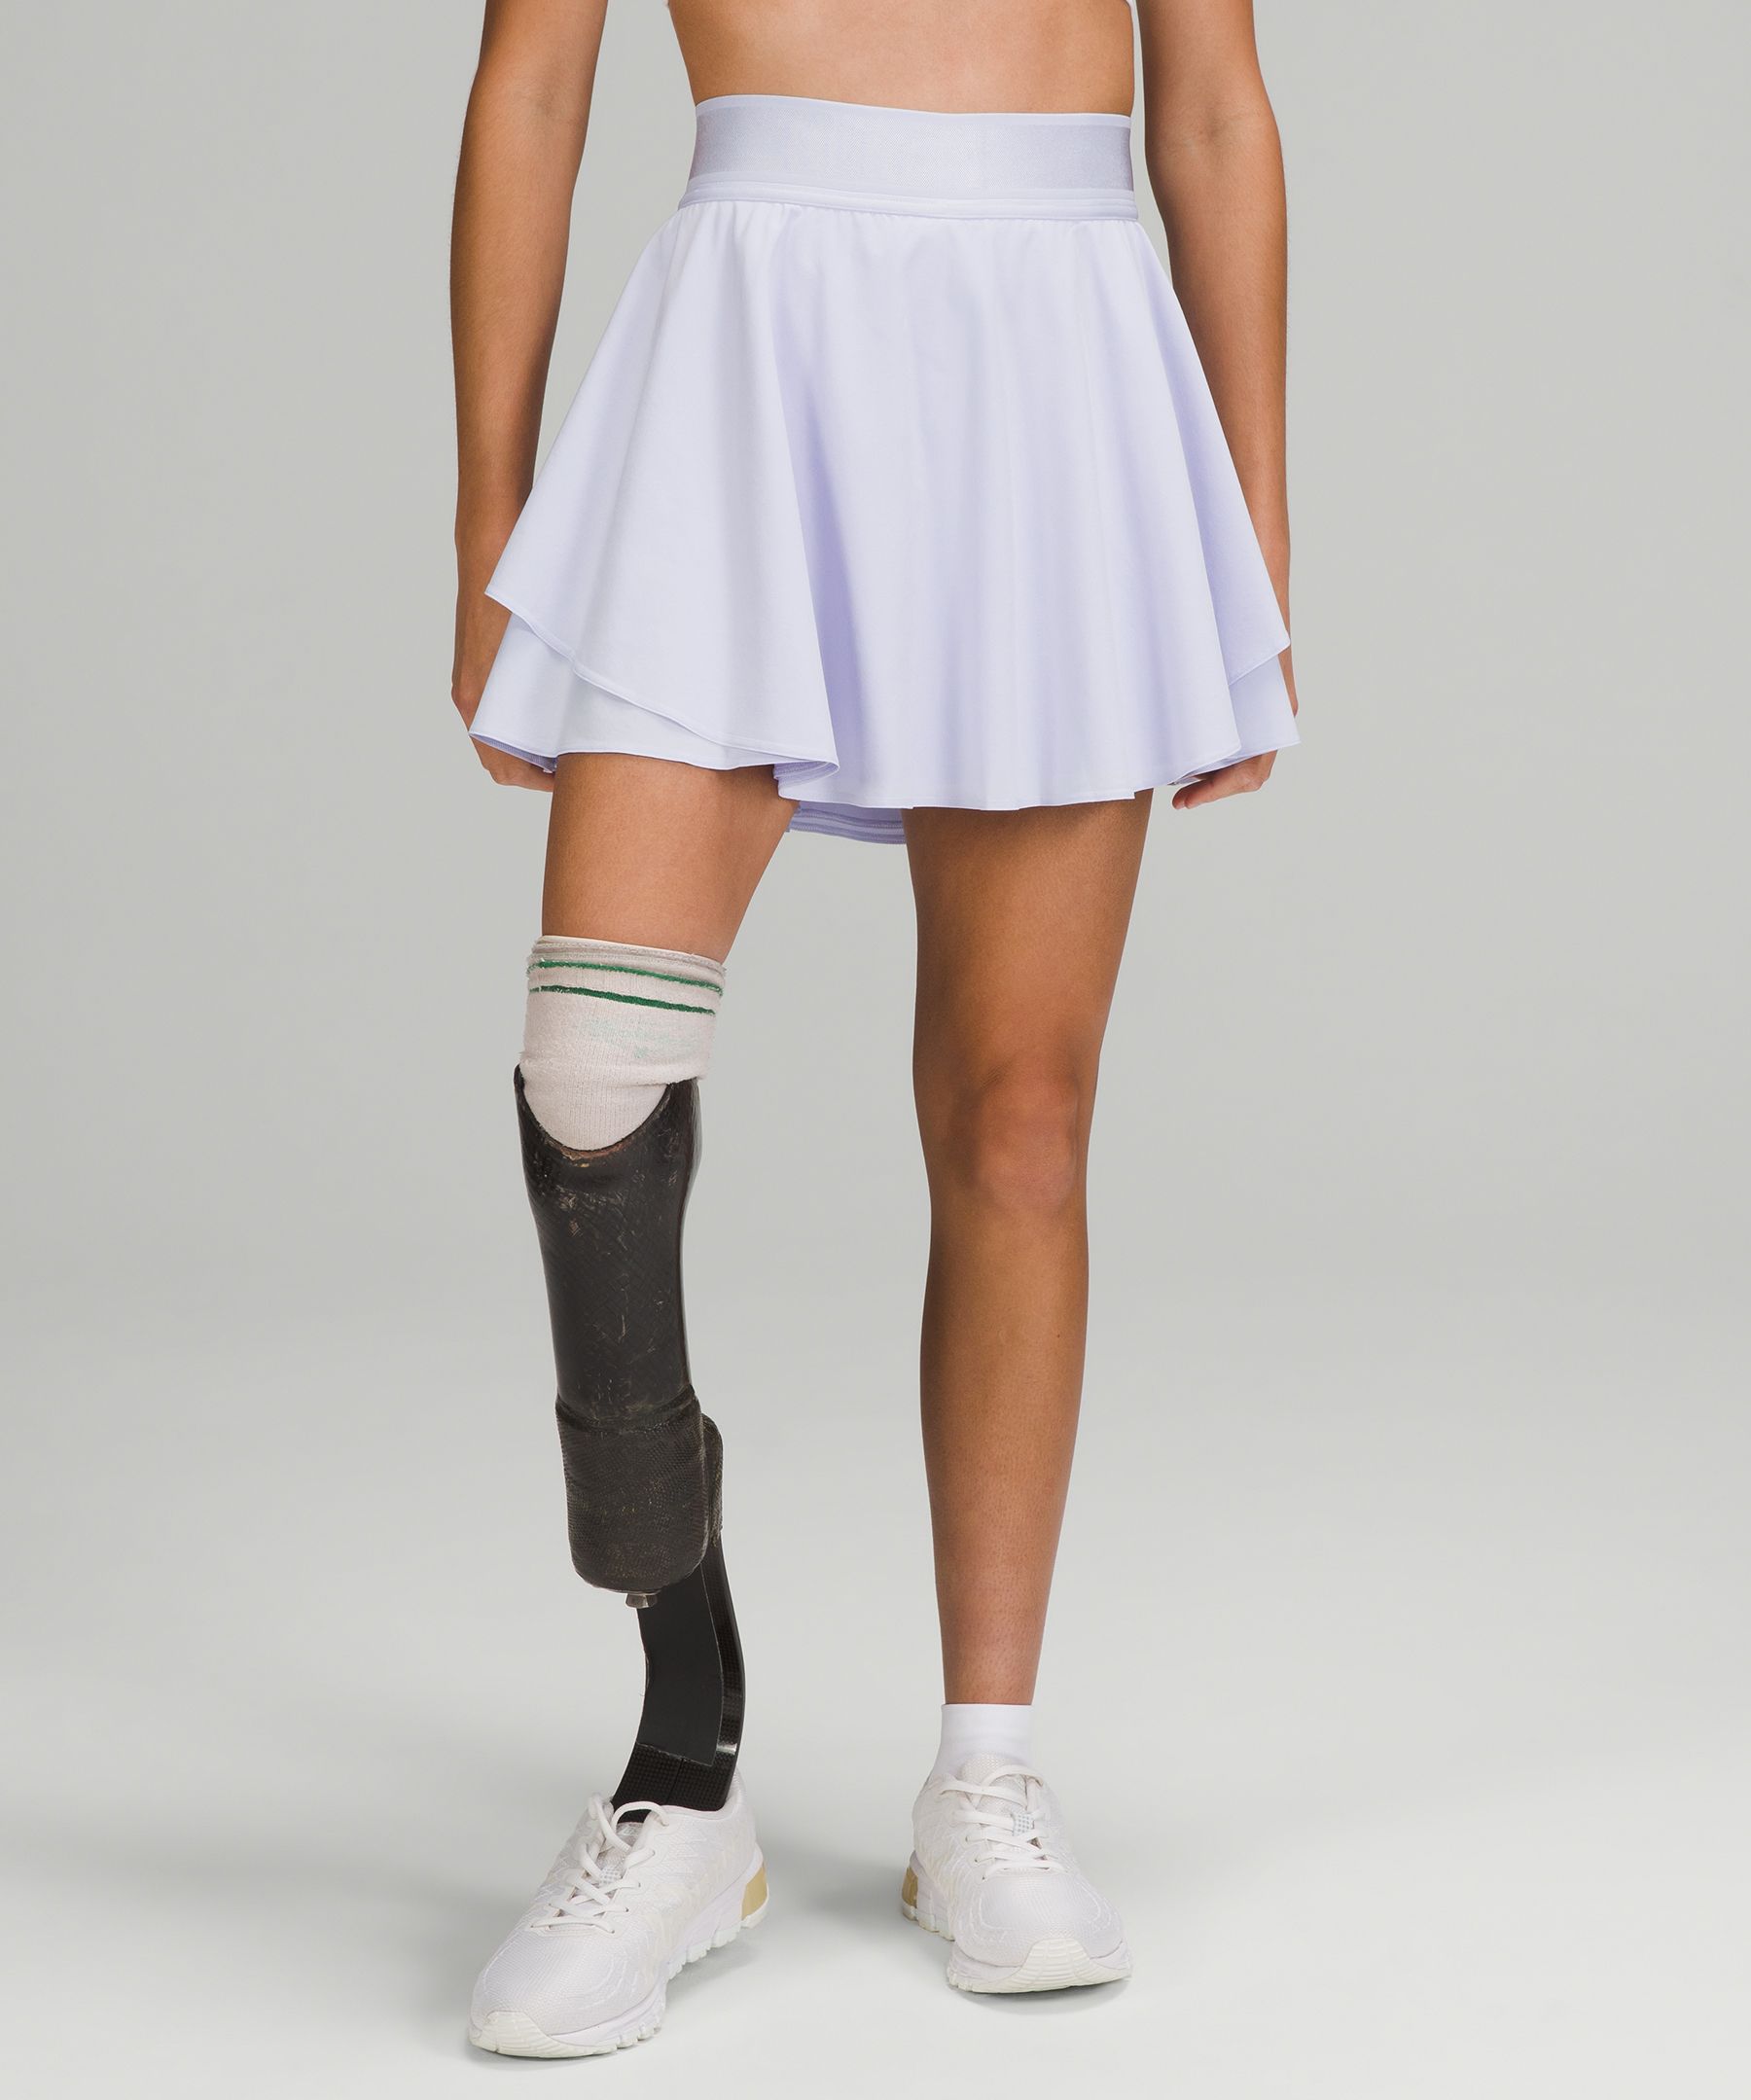 lululemon skirt outfit  Tennis skirt outfit, Lululemon skirt